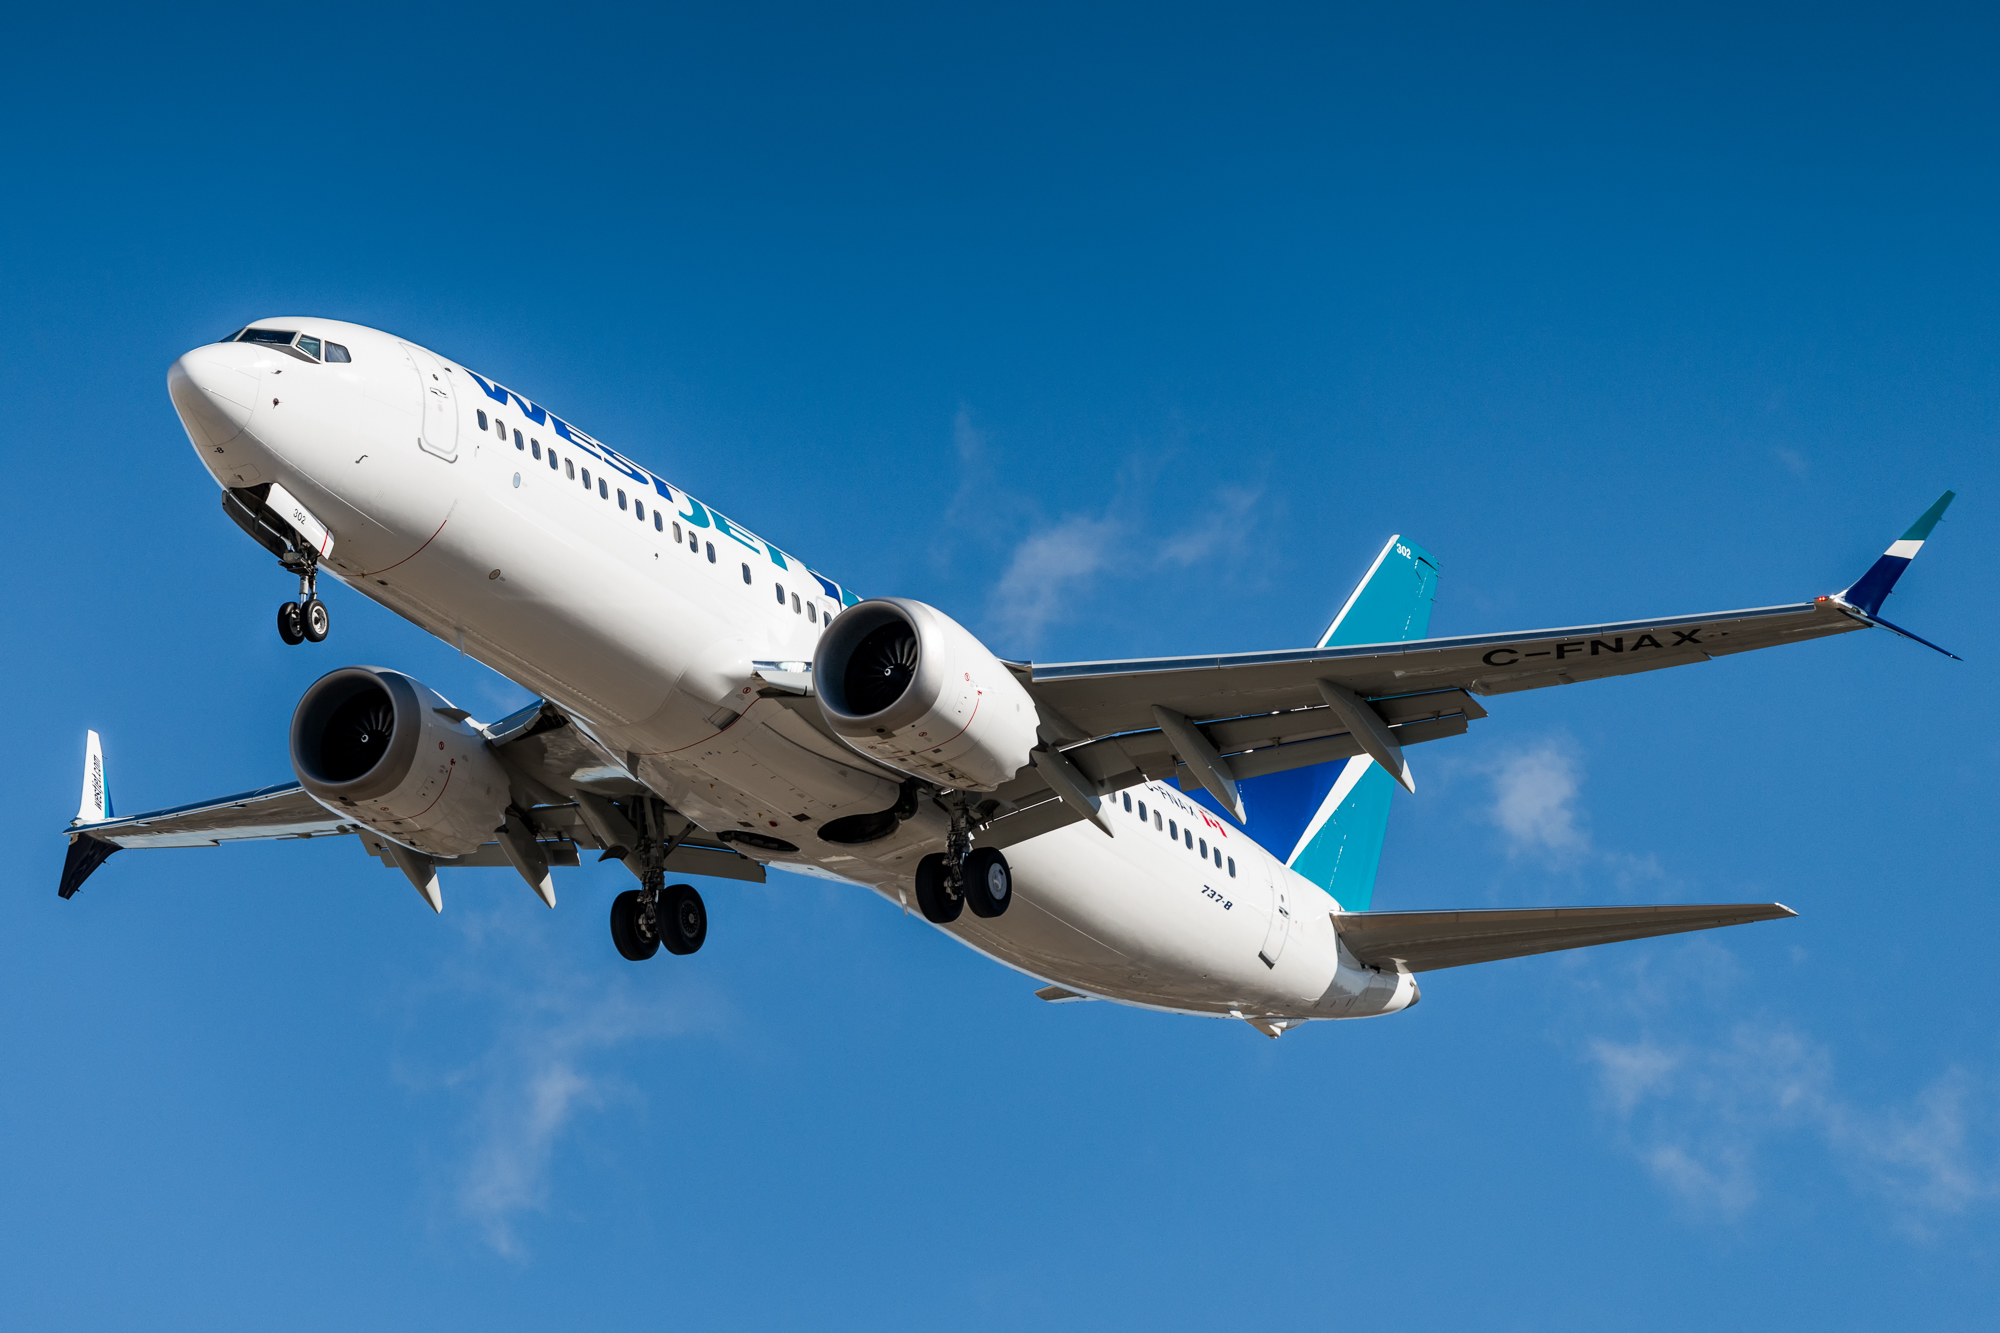 Boeing 737 Max: Design Flaws, Regulatory Failure